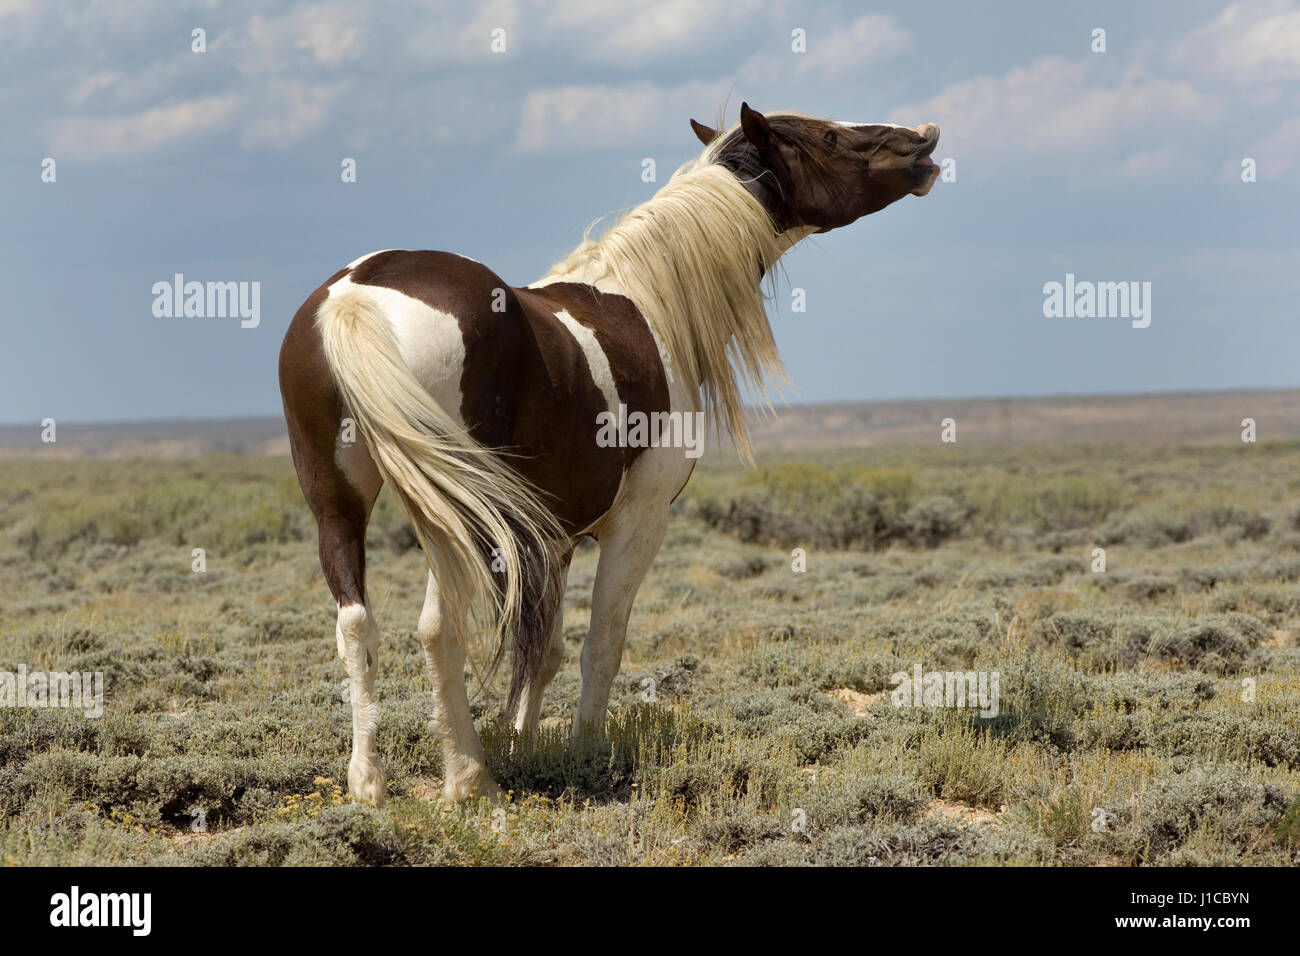 Mustang (Equus ferus caballus), Stallion, piebald flehming en la pradera, Wyoming, EE.UU. Foto de stock